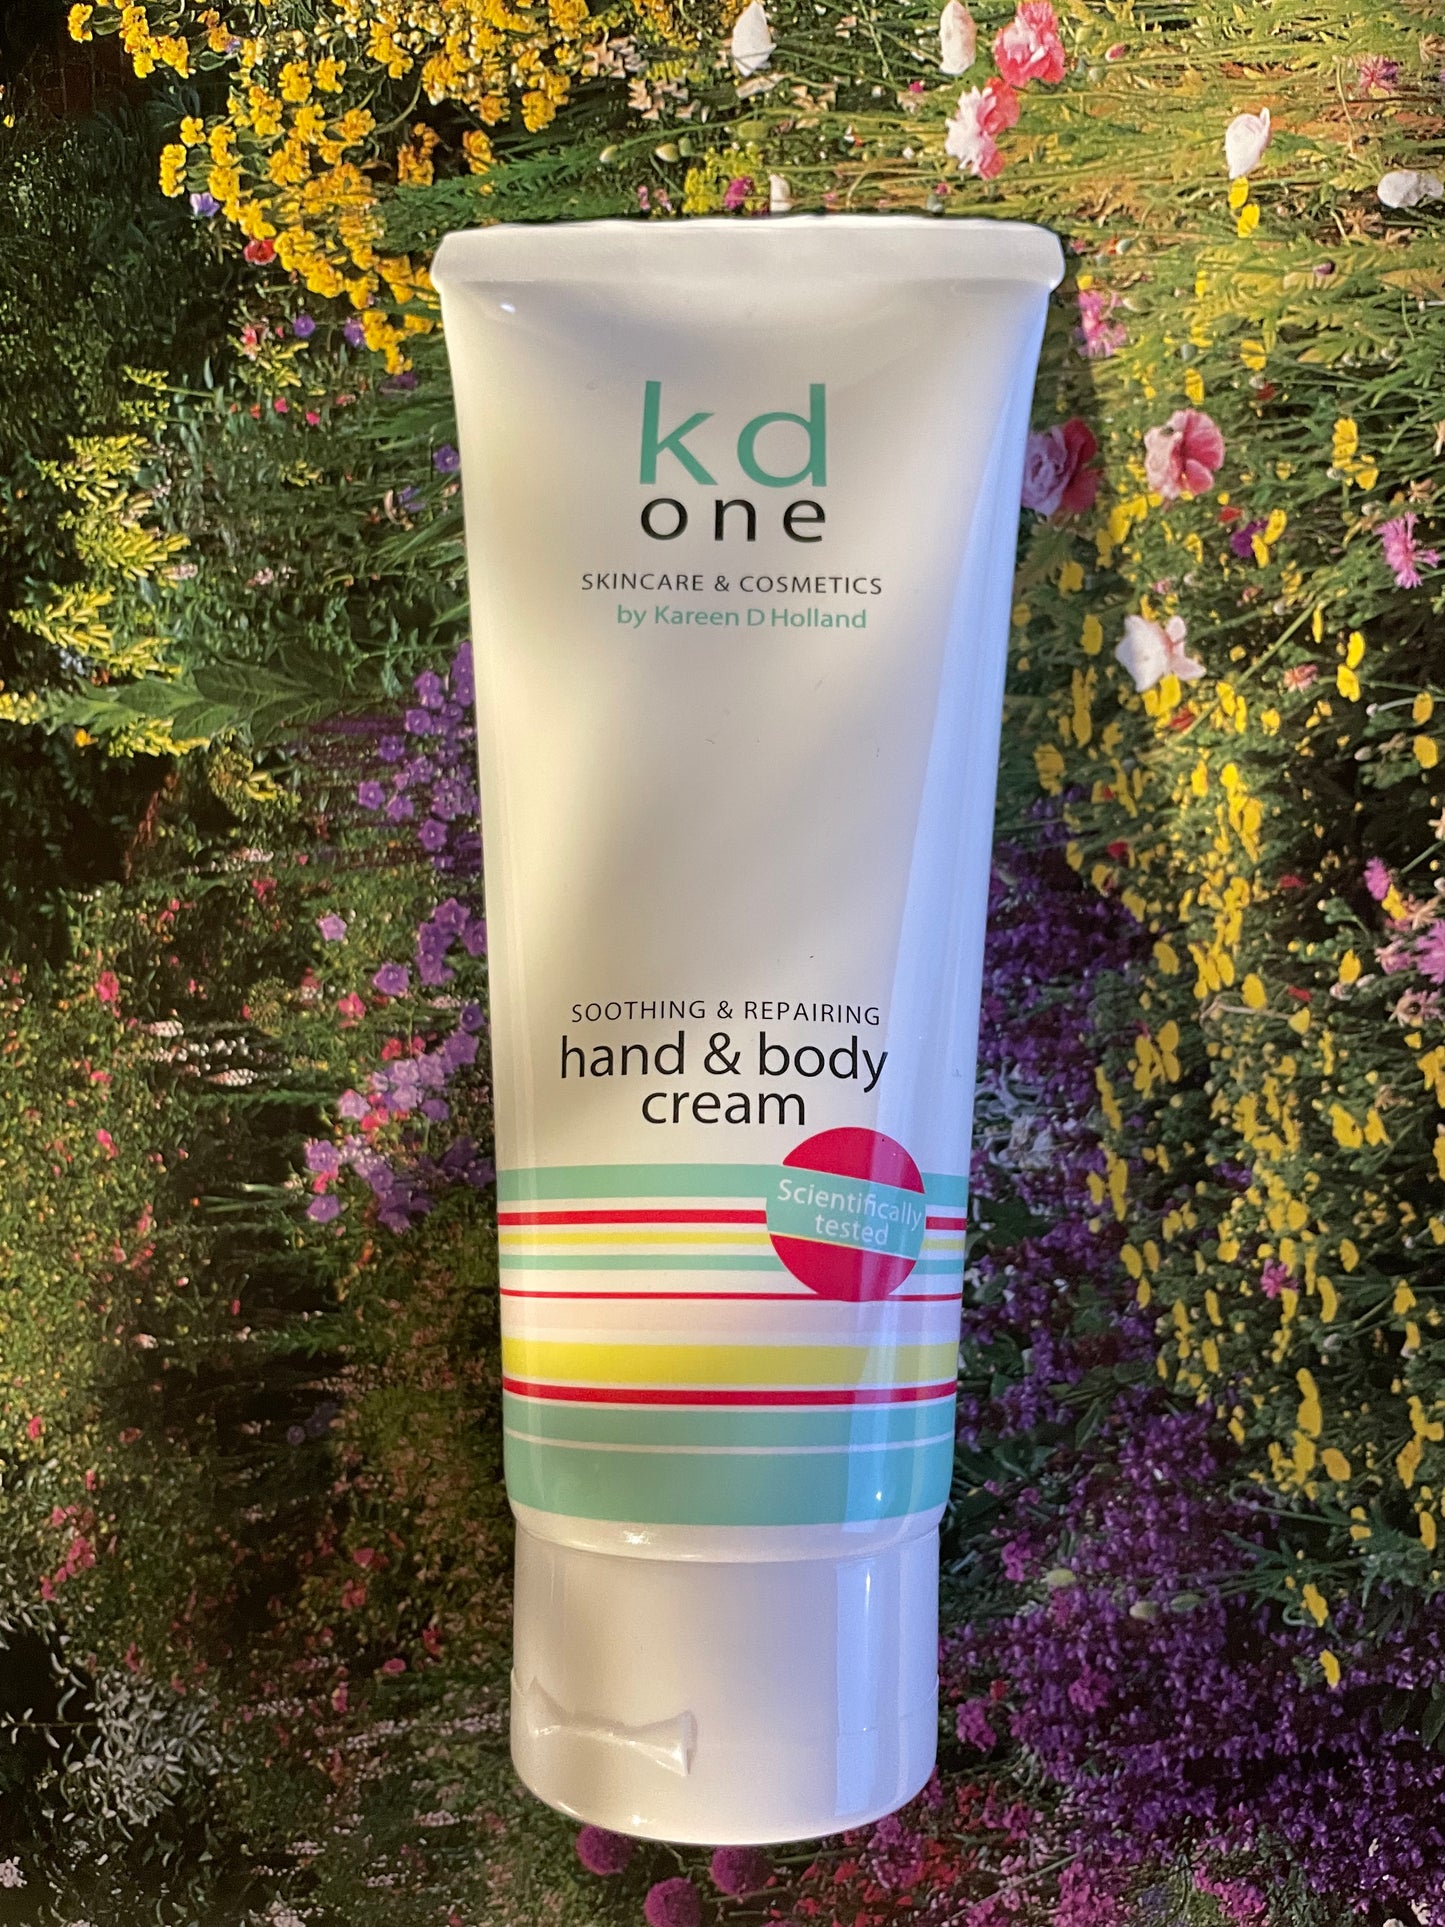 Hand & body cream (kd one)